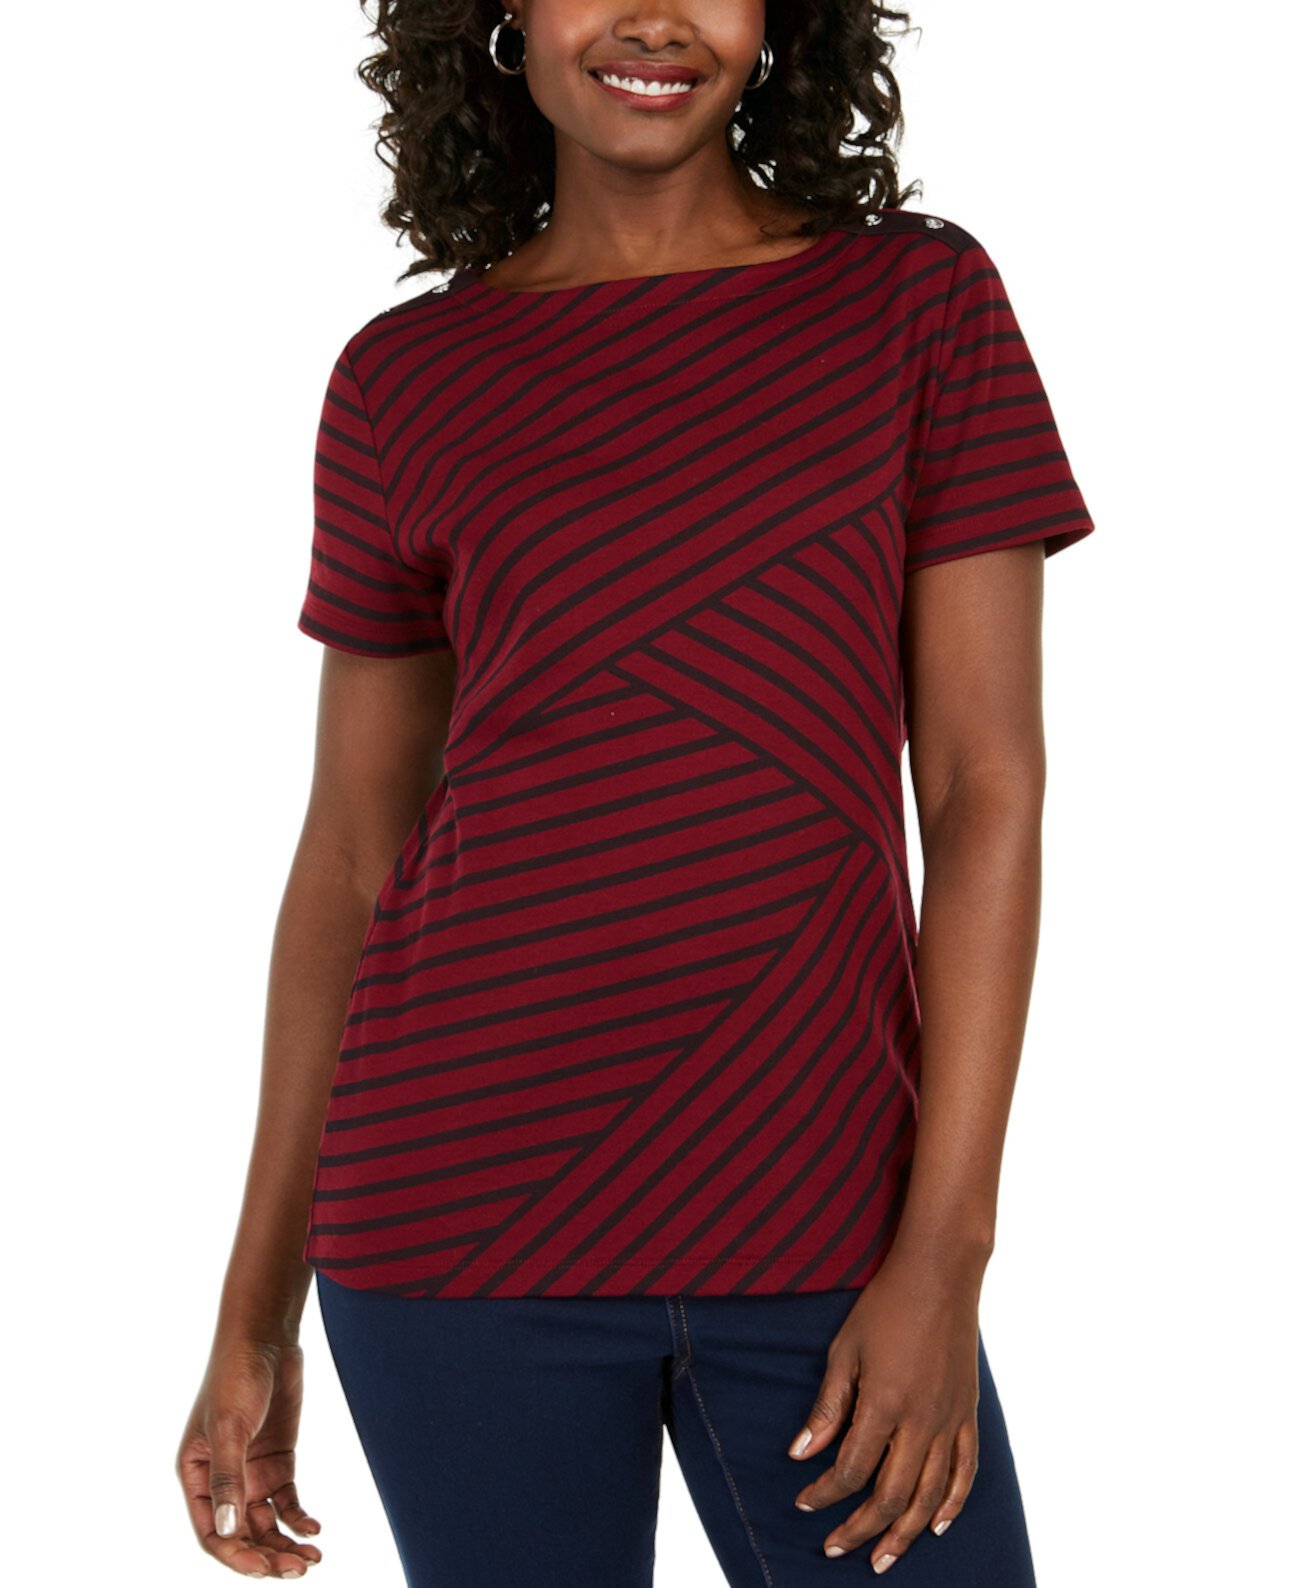 Petite Asymmetrical-Stripe Top, Created for Macy's Karen Scott